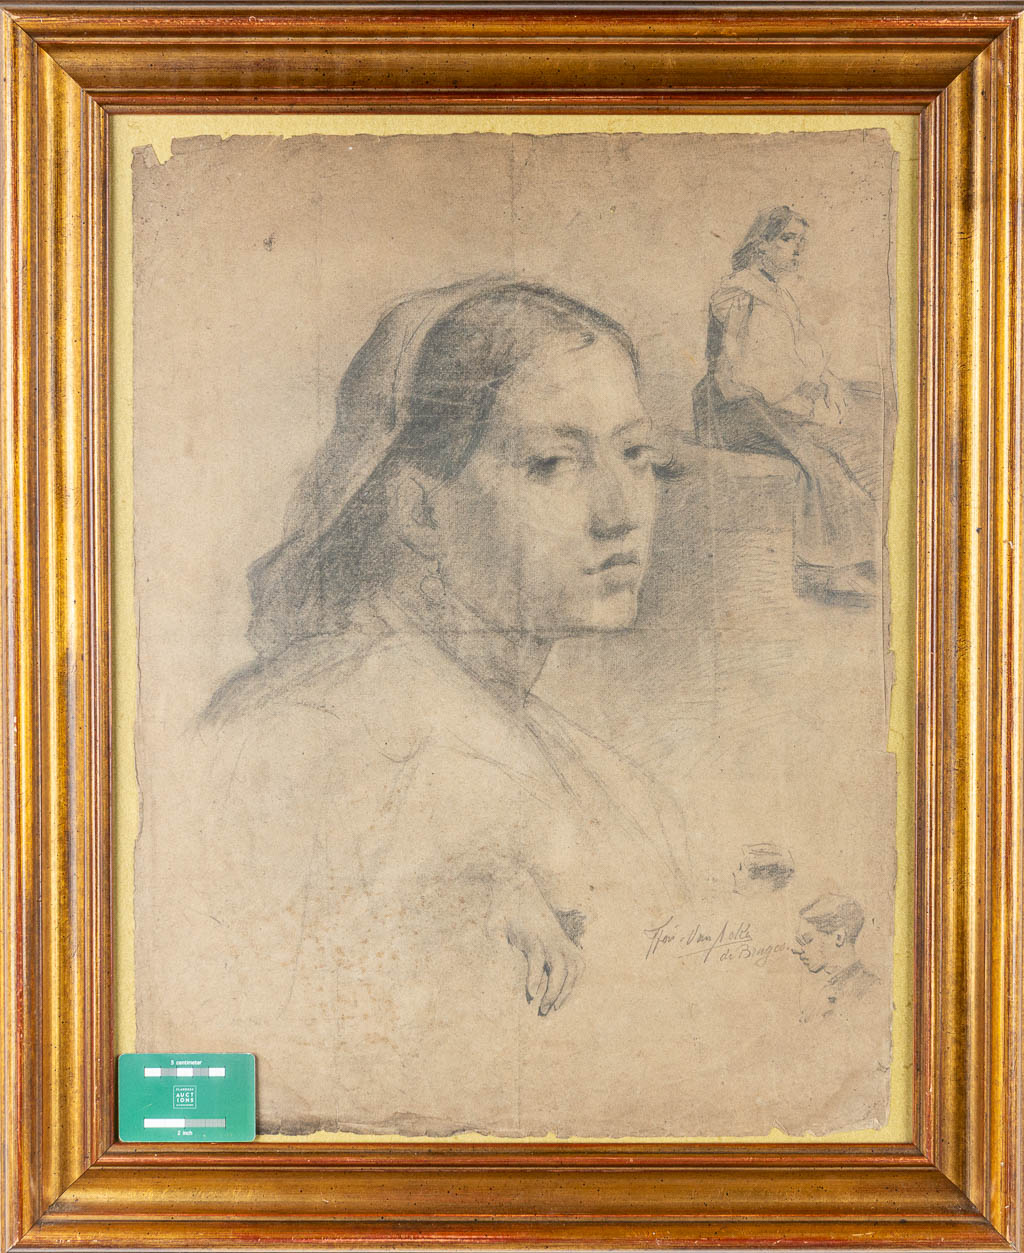 Flori Marie VAN ACKER (1858-1940) 'A study' a drawing, pencil on paper. (47 x 63 cm)